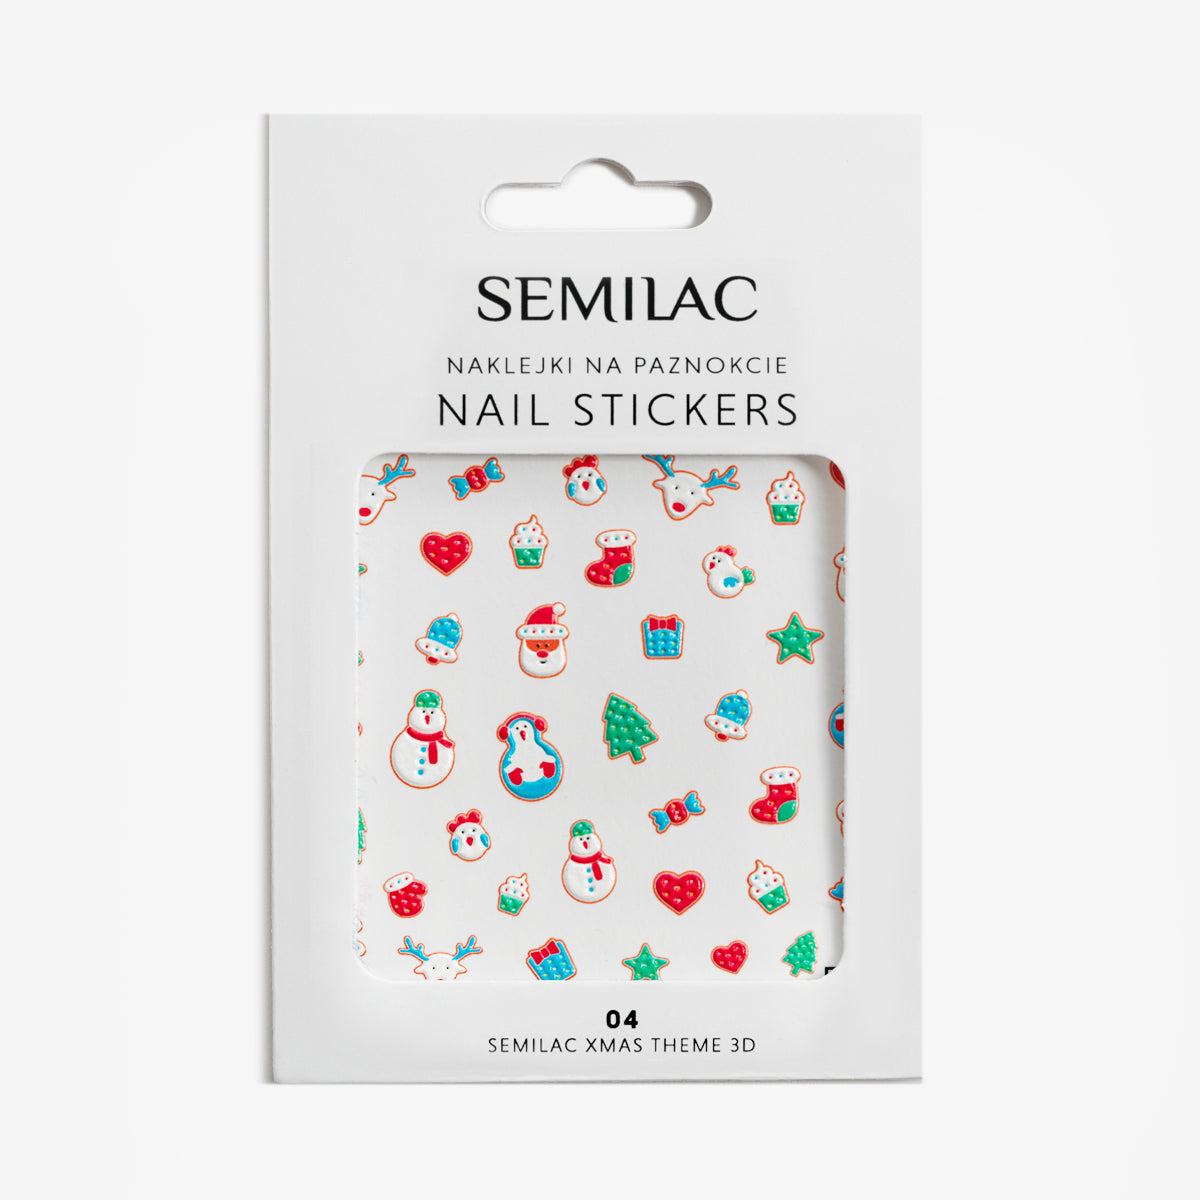 Semilac Xmas theme 3D Nail Stickers 04 - Semilac UK